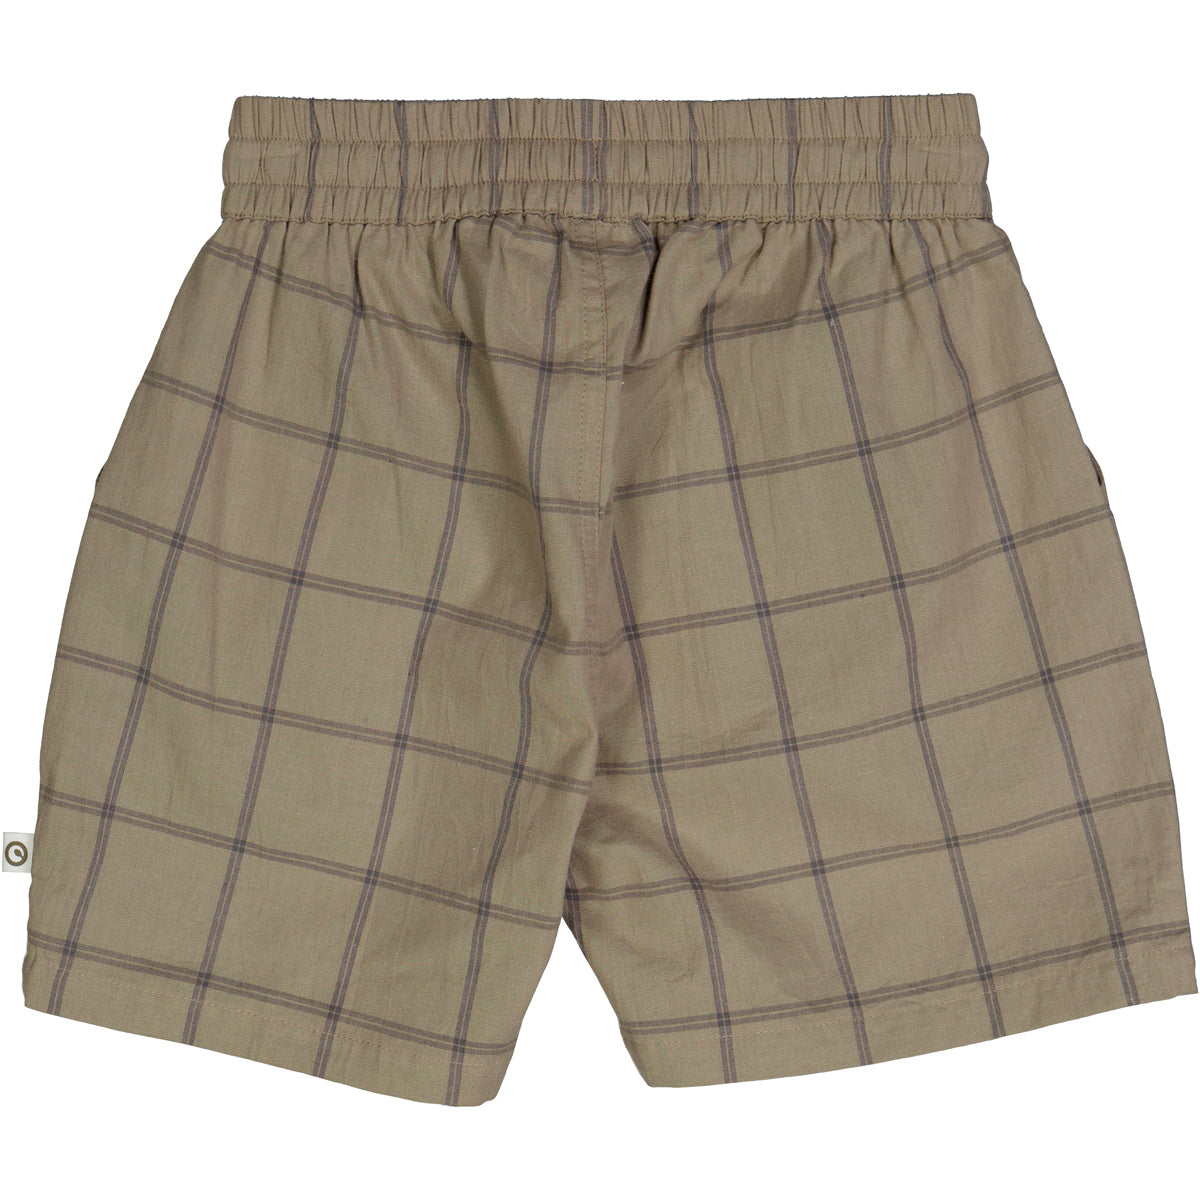 Check shorts - Cashew